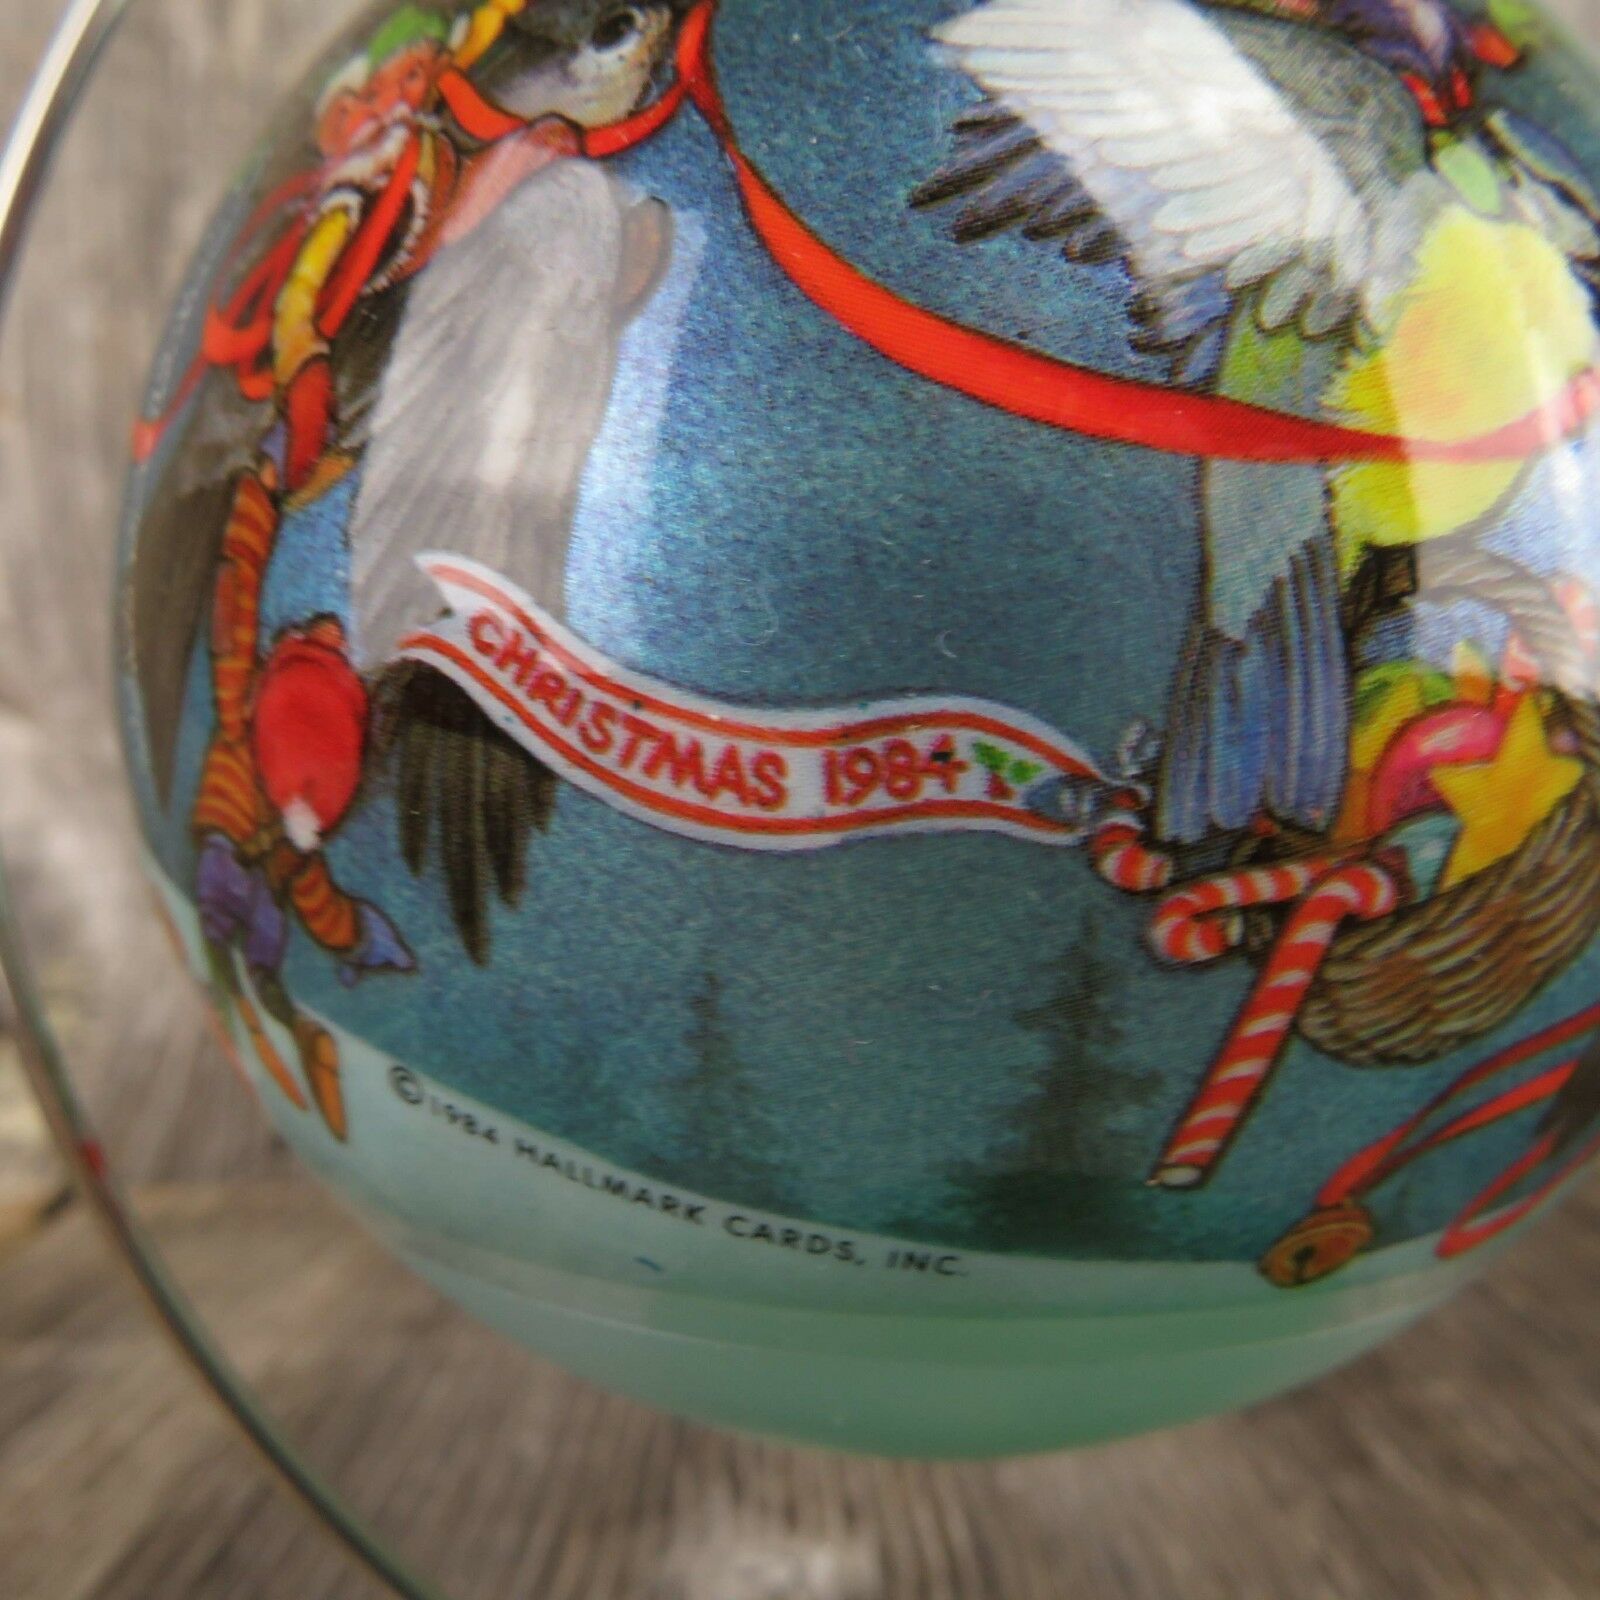 Vintage Ball Ornament Hallmark Flights of Fantasy Blue Fairy Gnome Birds Magic - At Grandma's Table